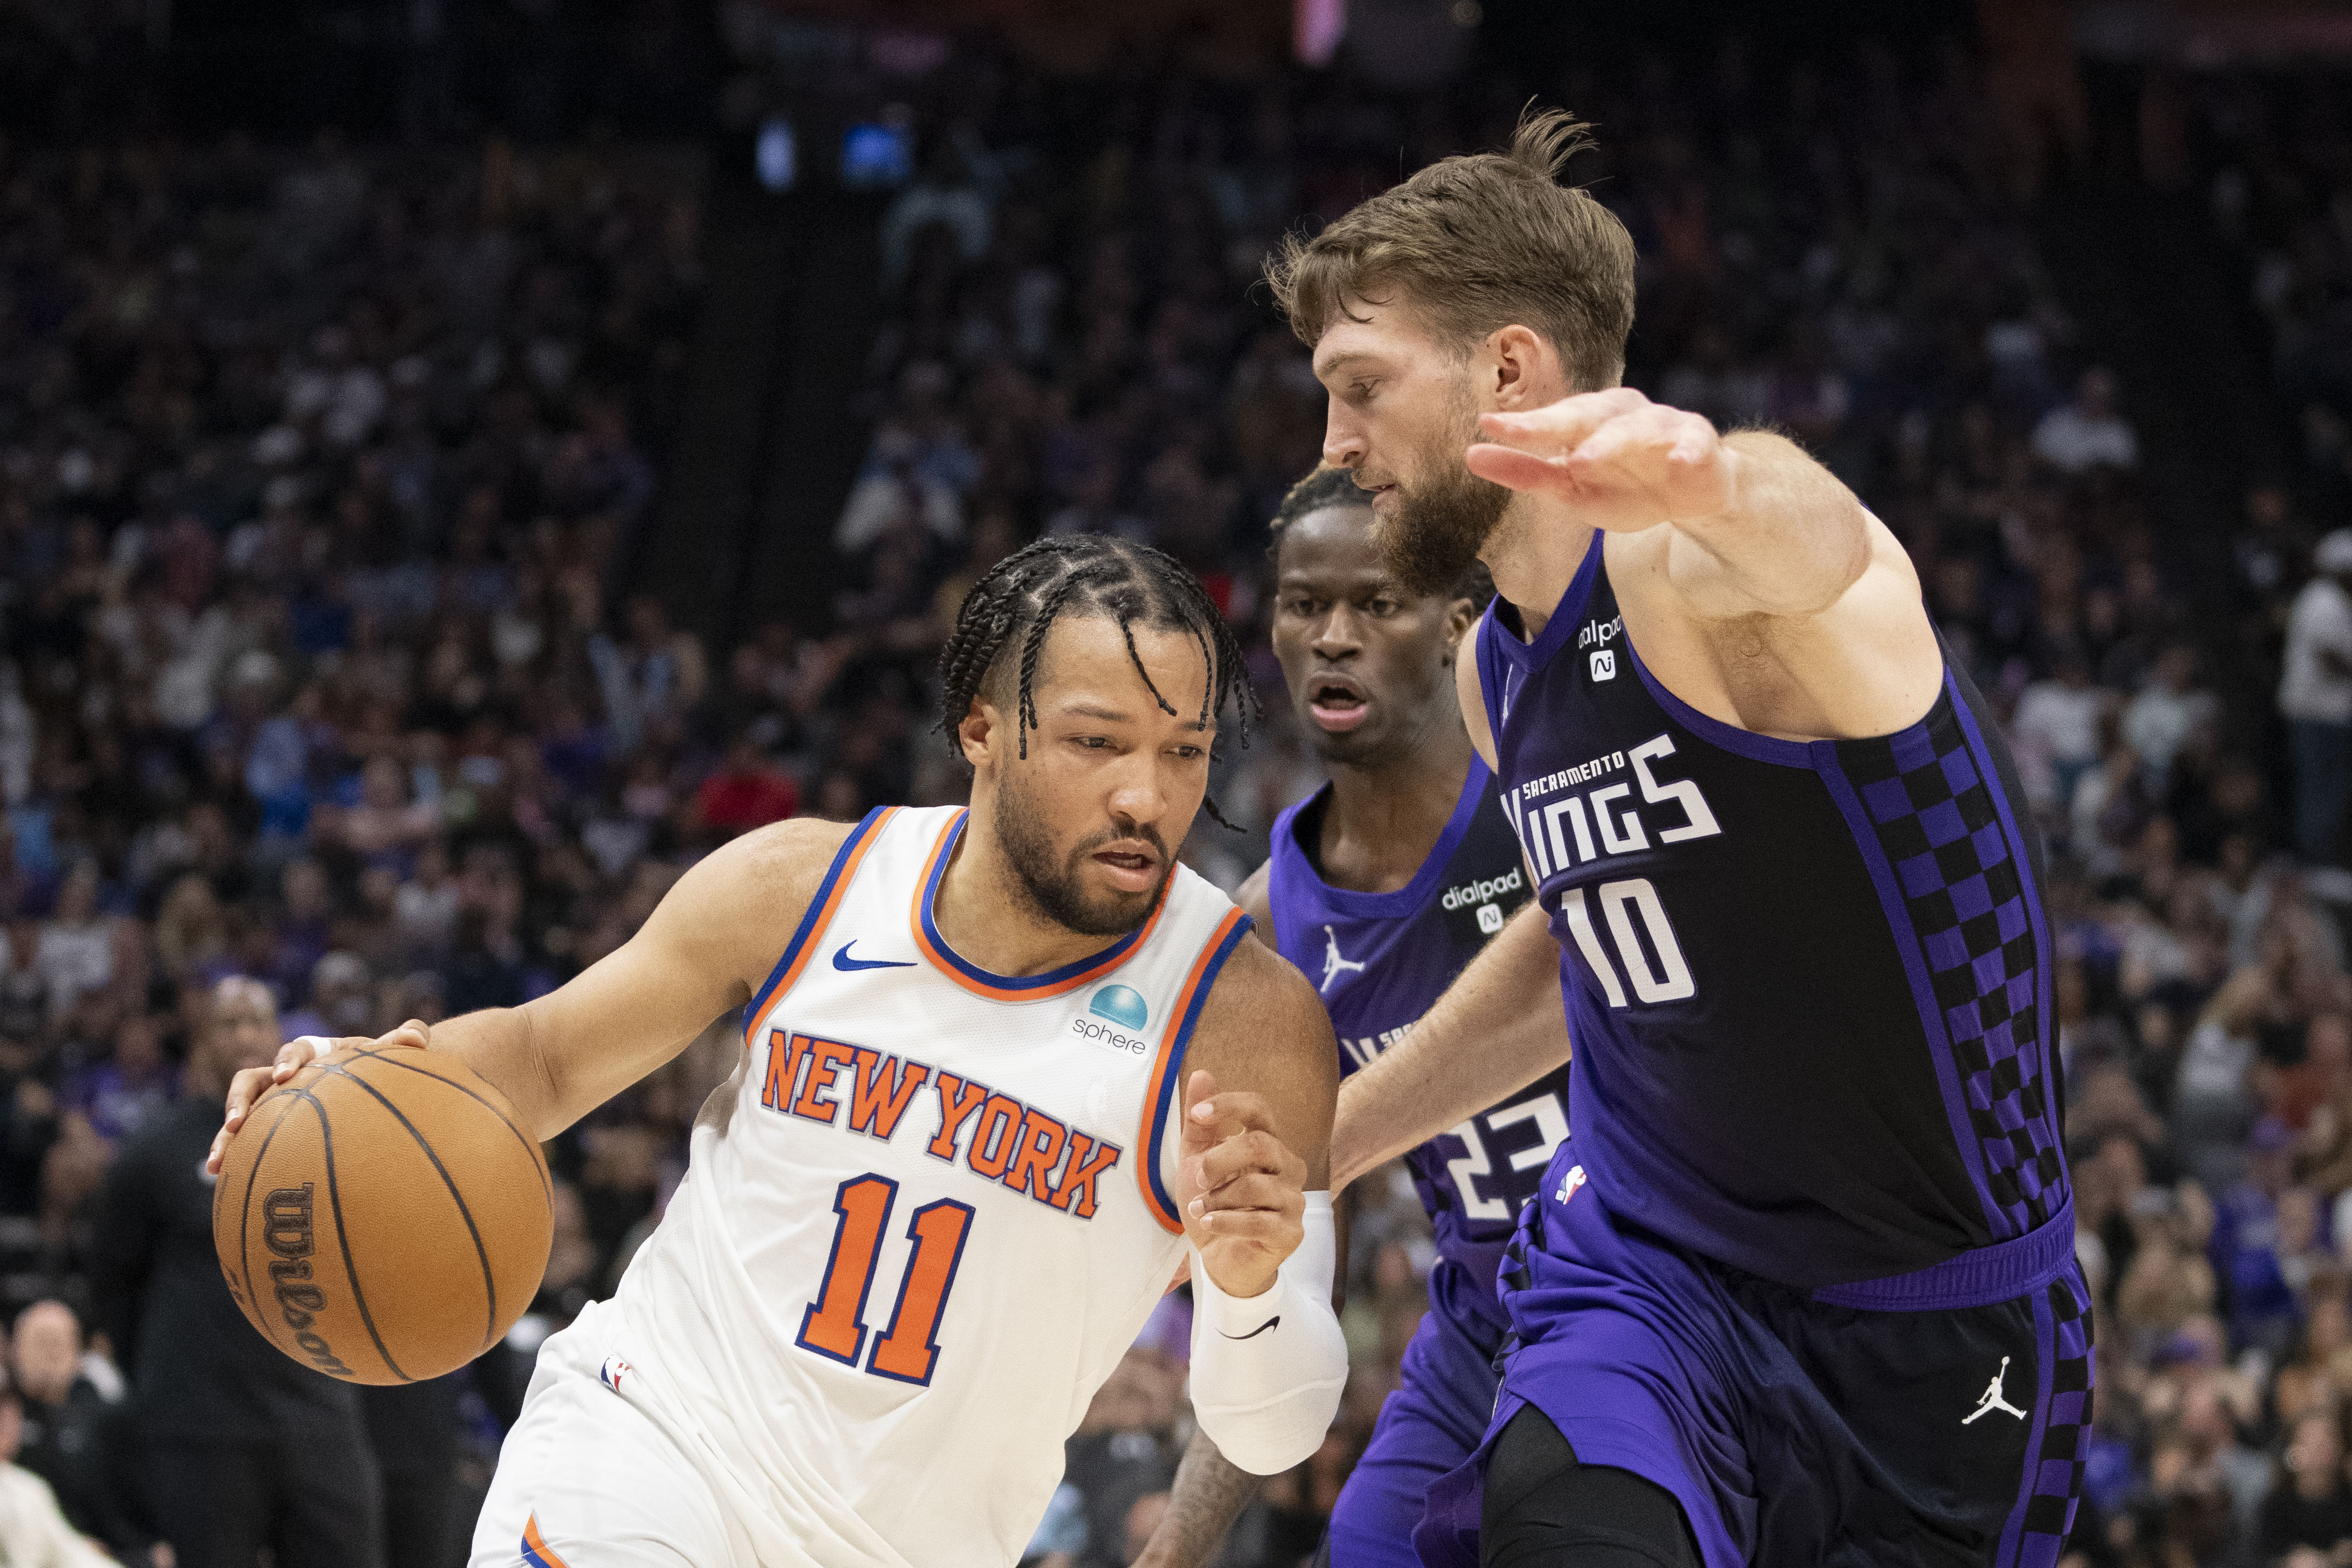 New York Knicks guard Jalen Brunson (11) dribbles the basketball against Sacramento Kings forward Domantas Sabonis (10) during the second quarter at Golden 1 Center